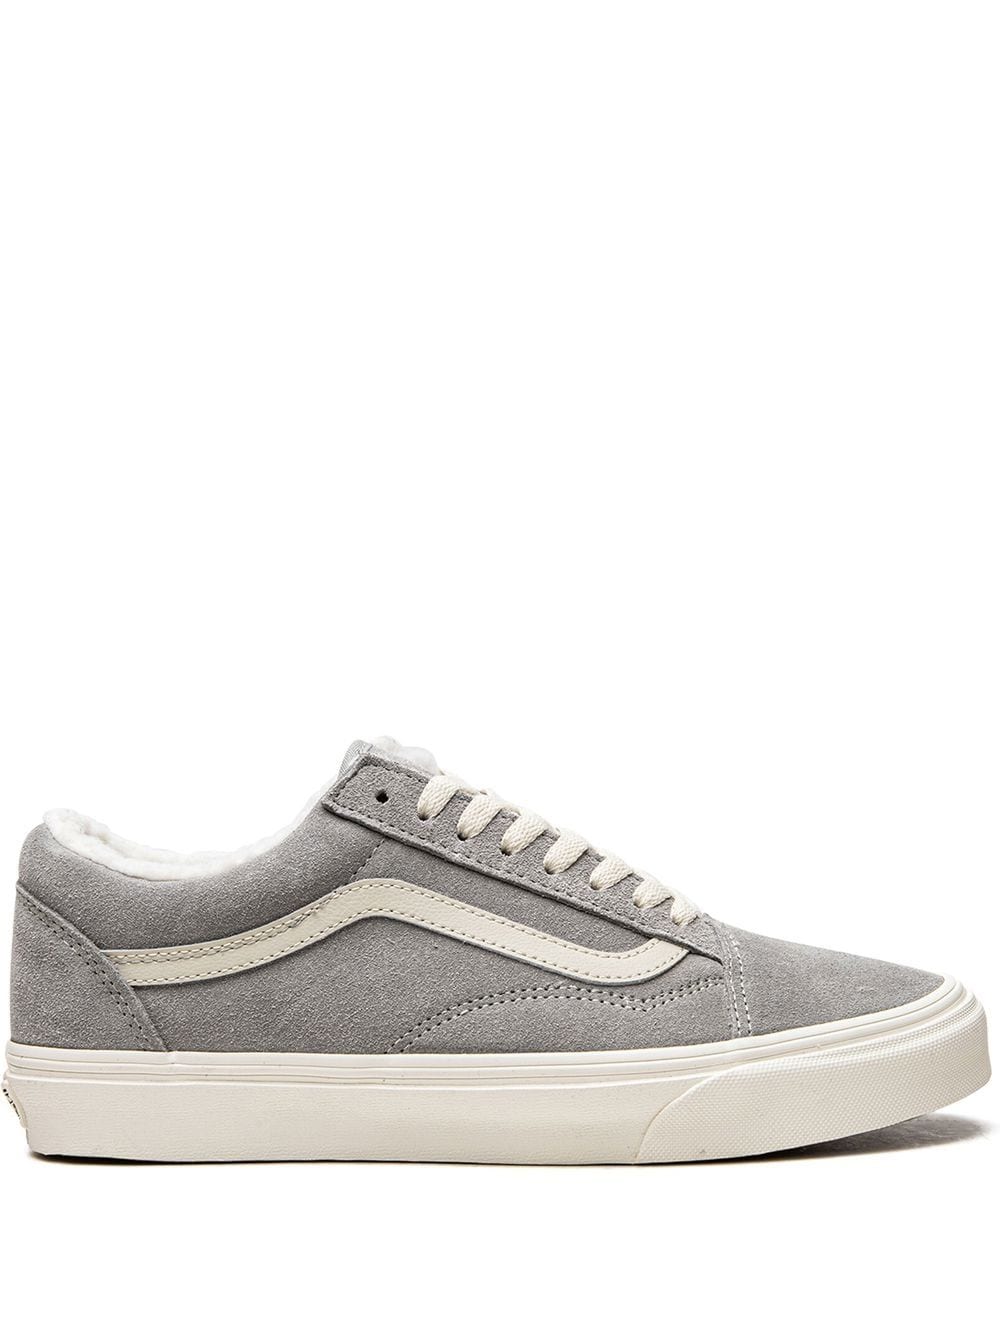 Vans Old Skool low-top sneakers - Grey von Vans